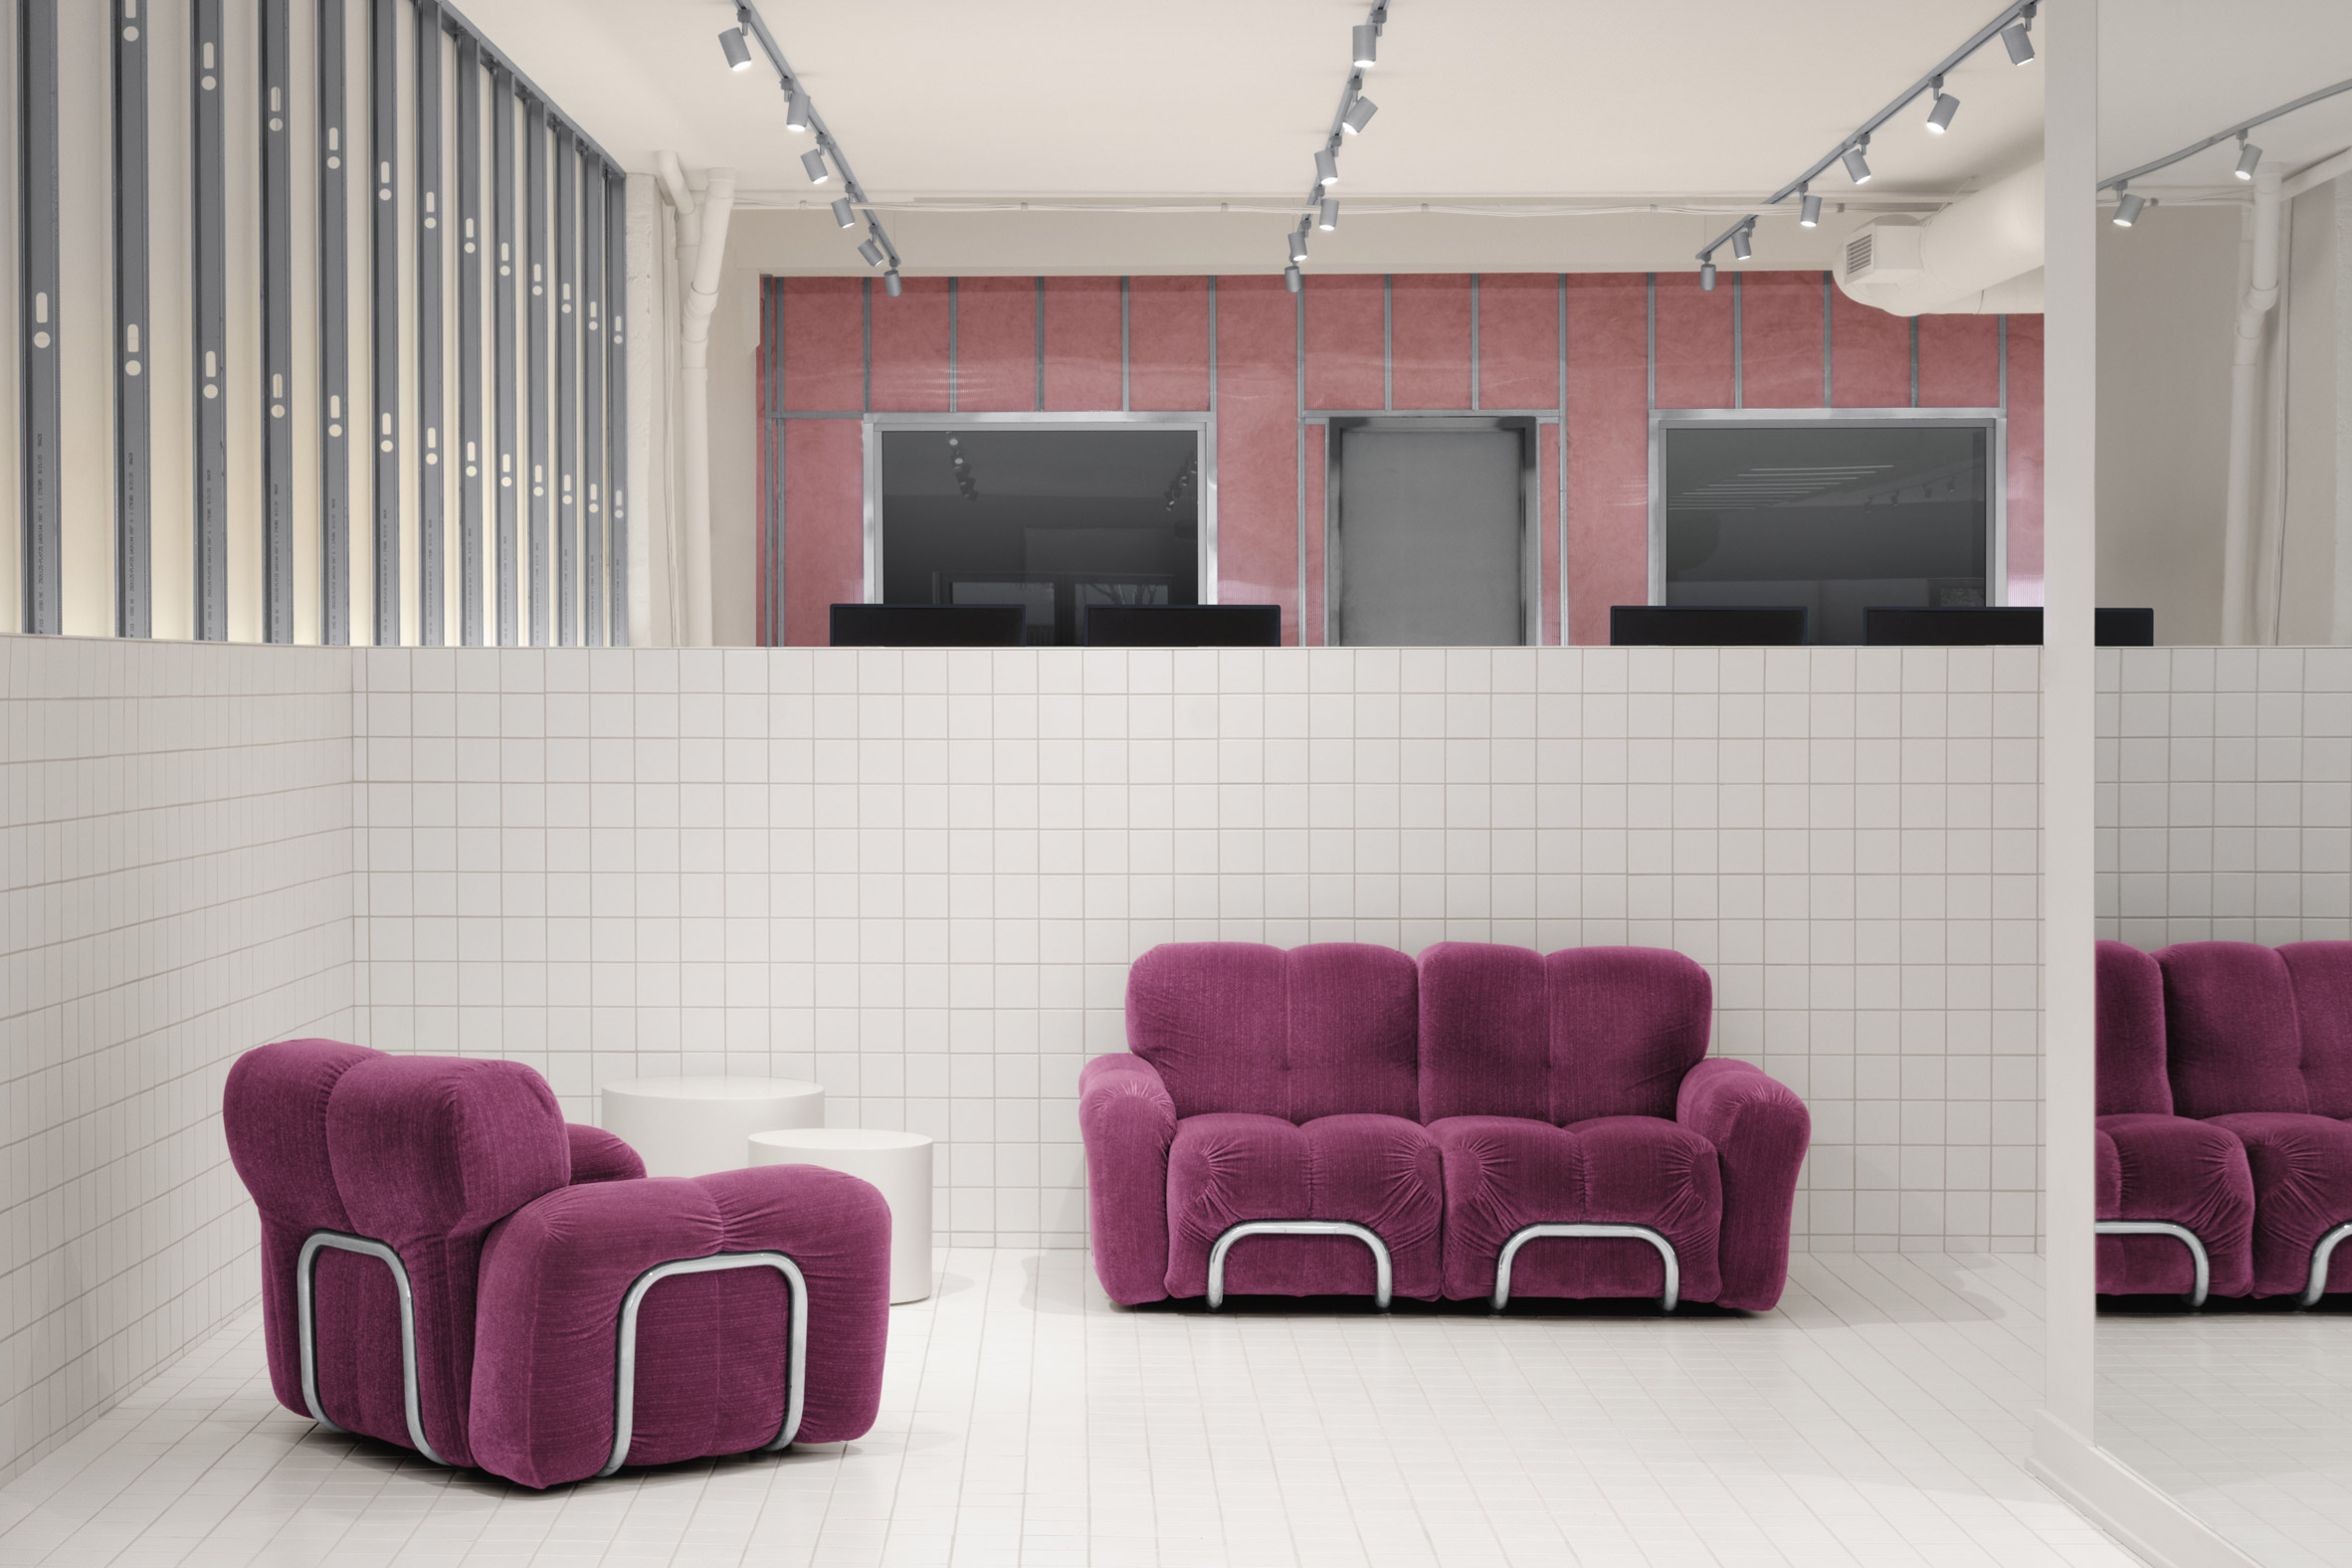 Purple sofas with raised work area behind